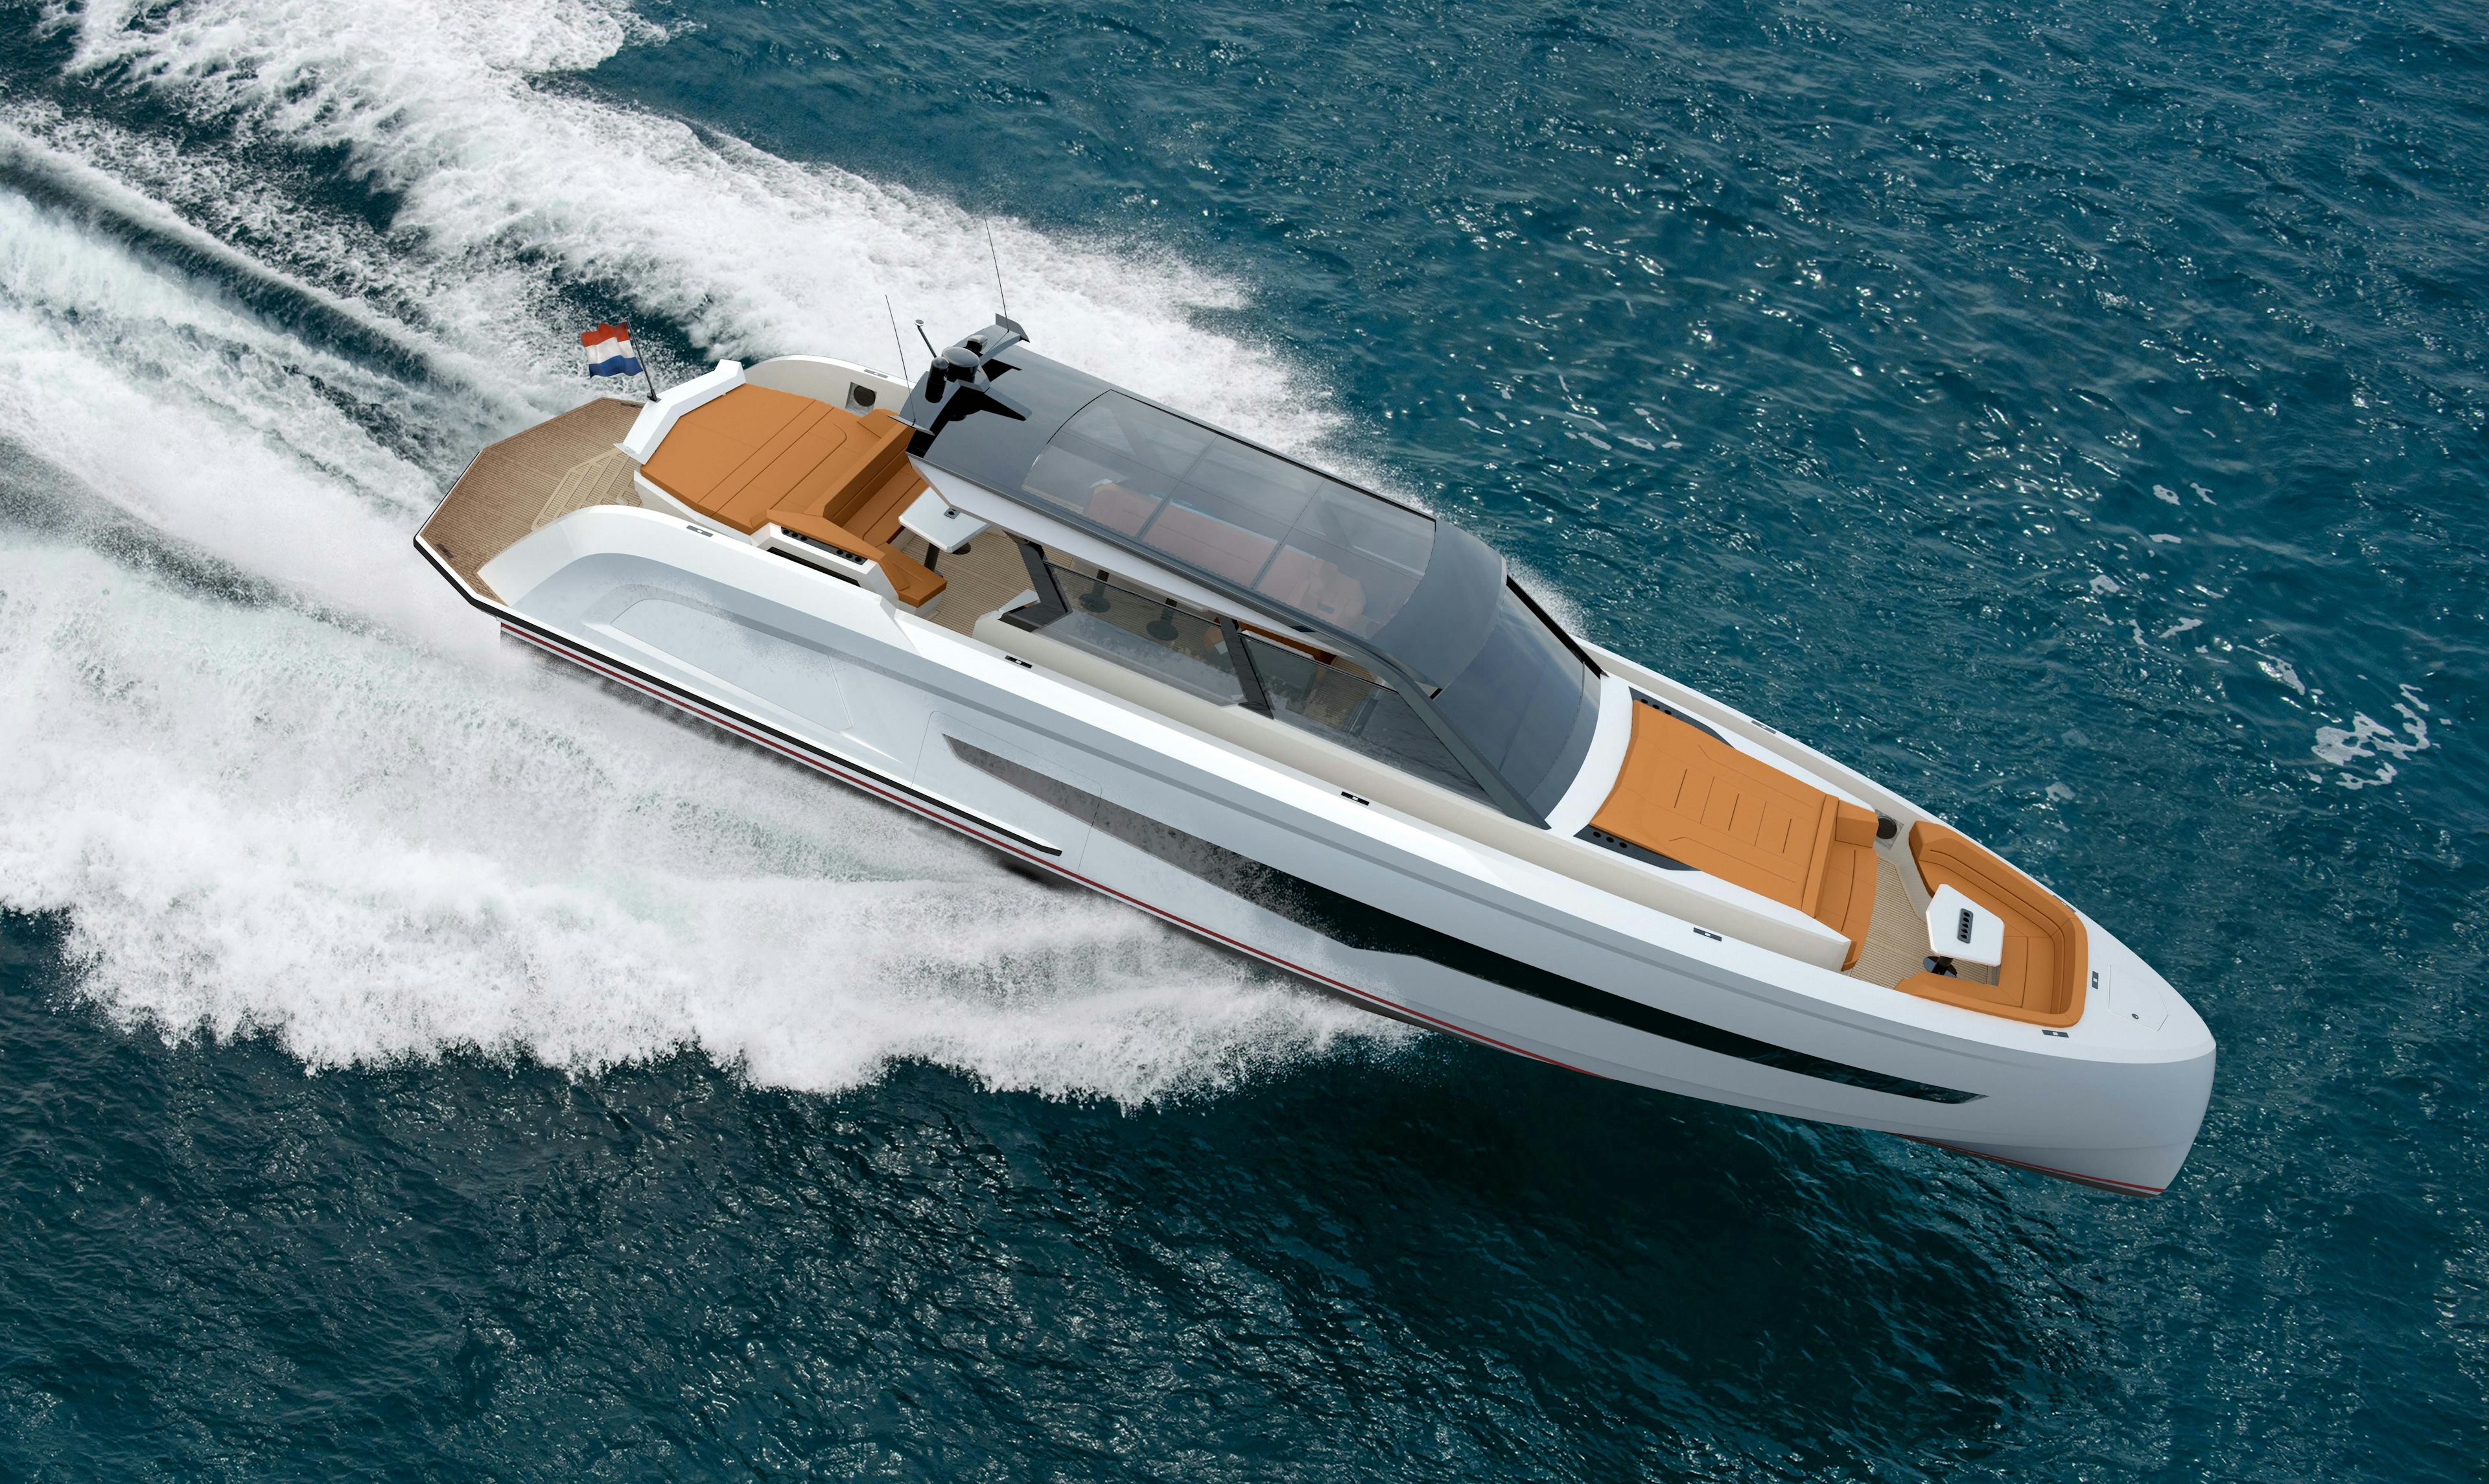 Vanquish-Yacht-VQ70-side-view-in-water